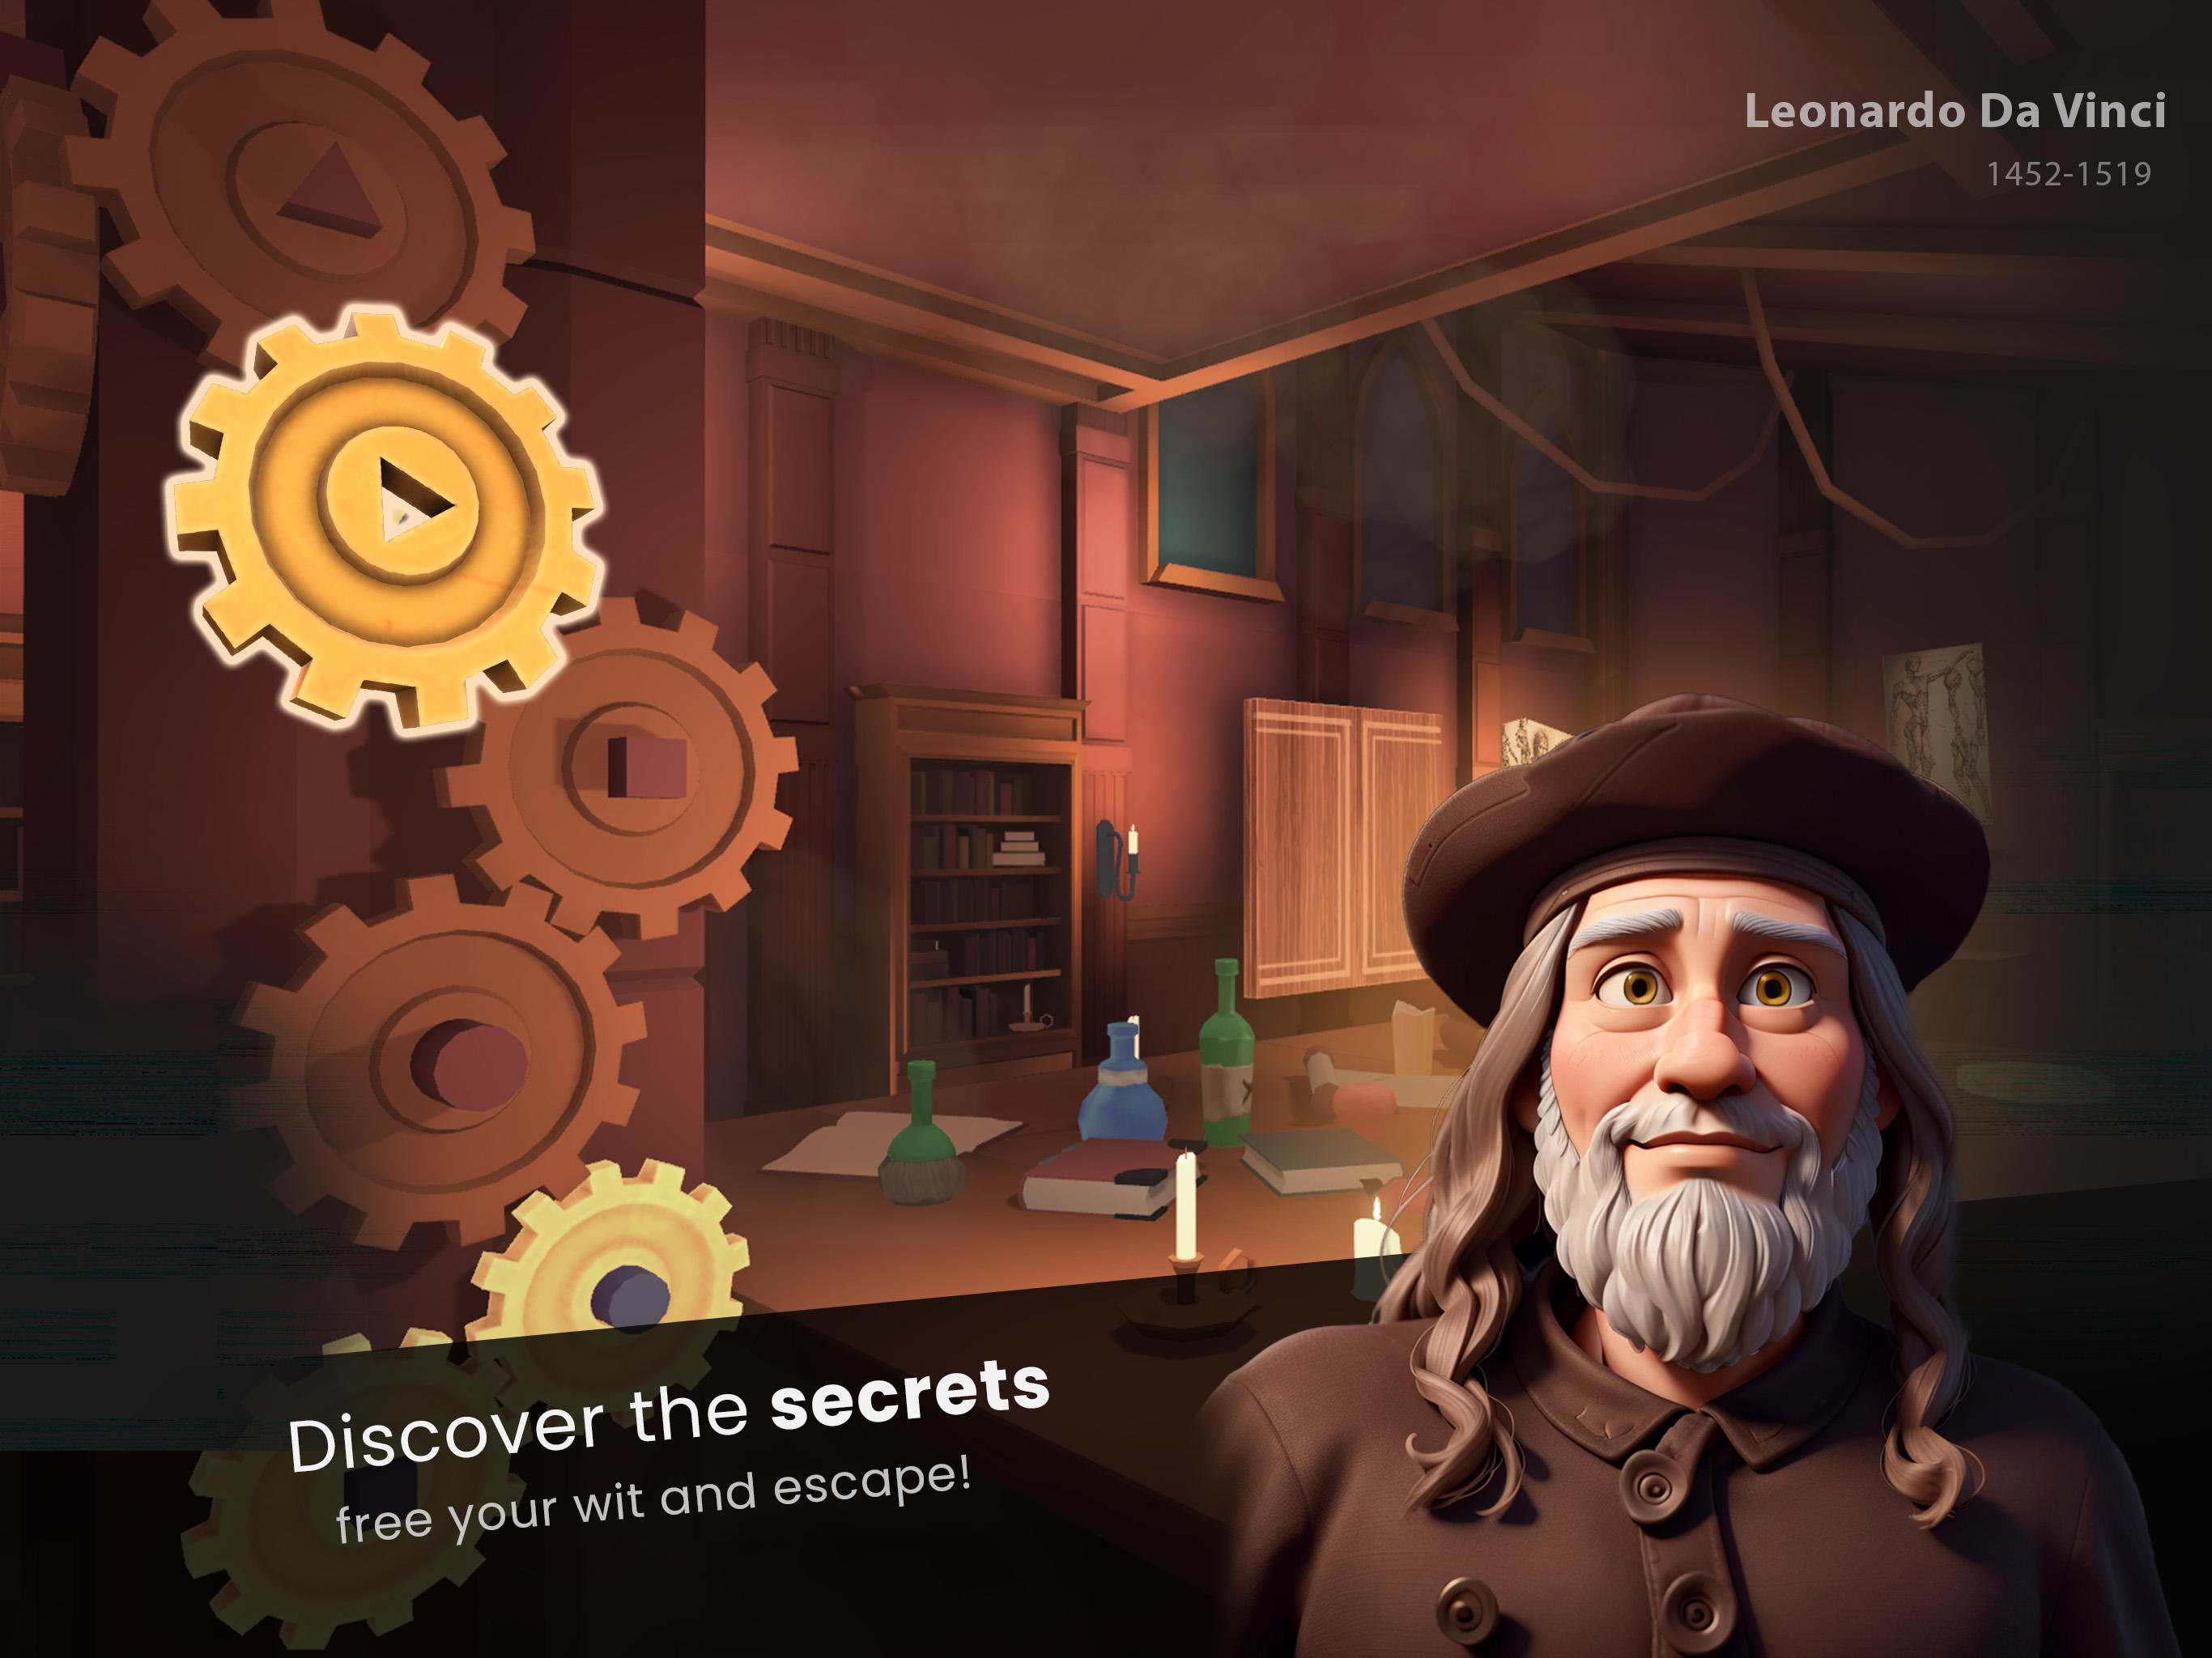 Historical Escape Room - game ภาพหน้าจอเกม